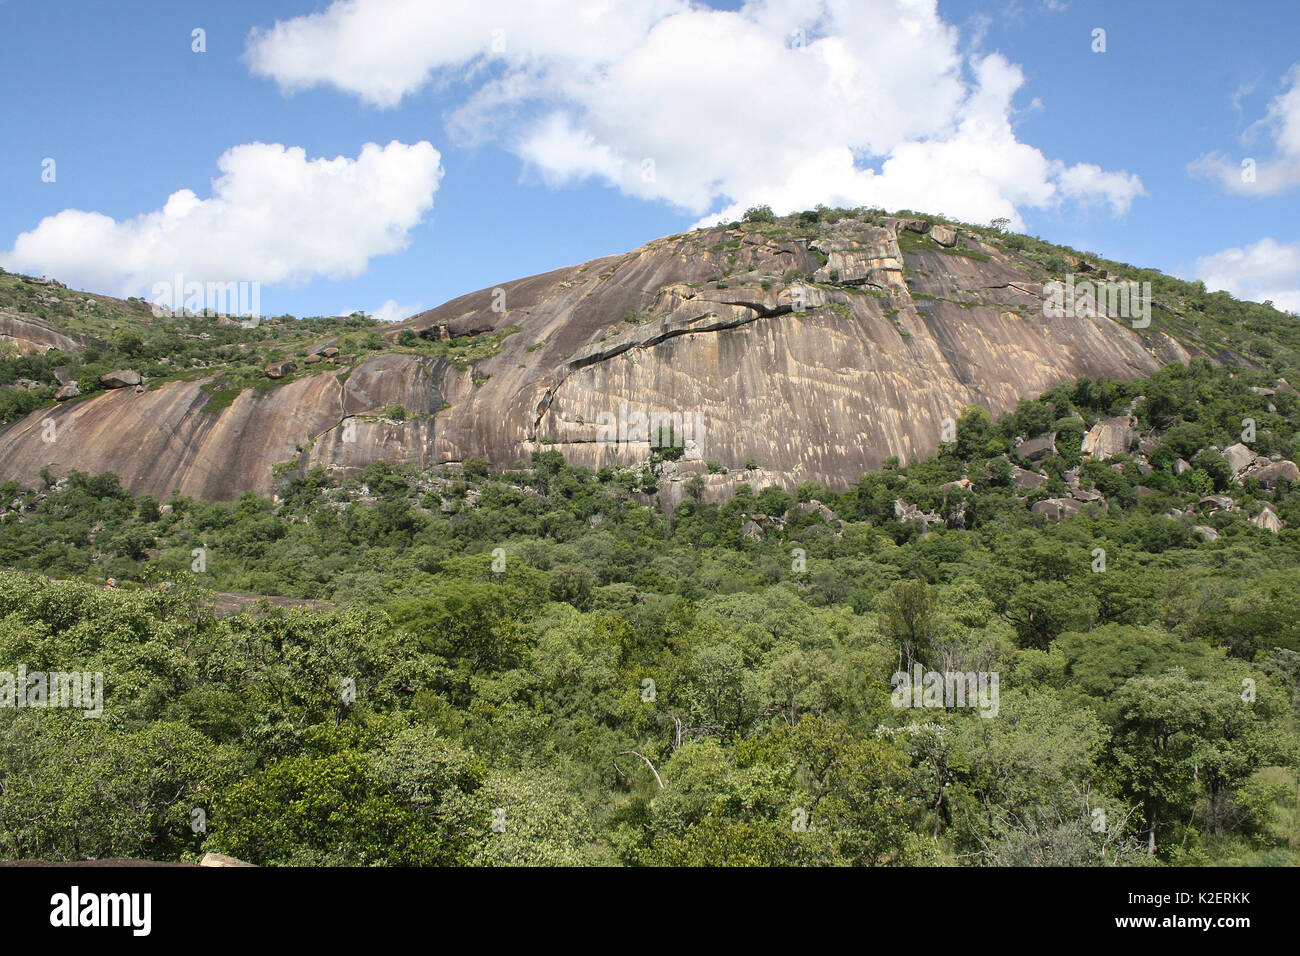 Felsen in der Nähe der Great Zimbabwe Ruinen, zentrale Simbabwe Januar 2011. Stockfoto